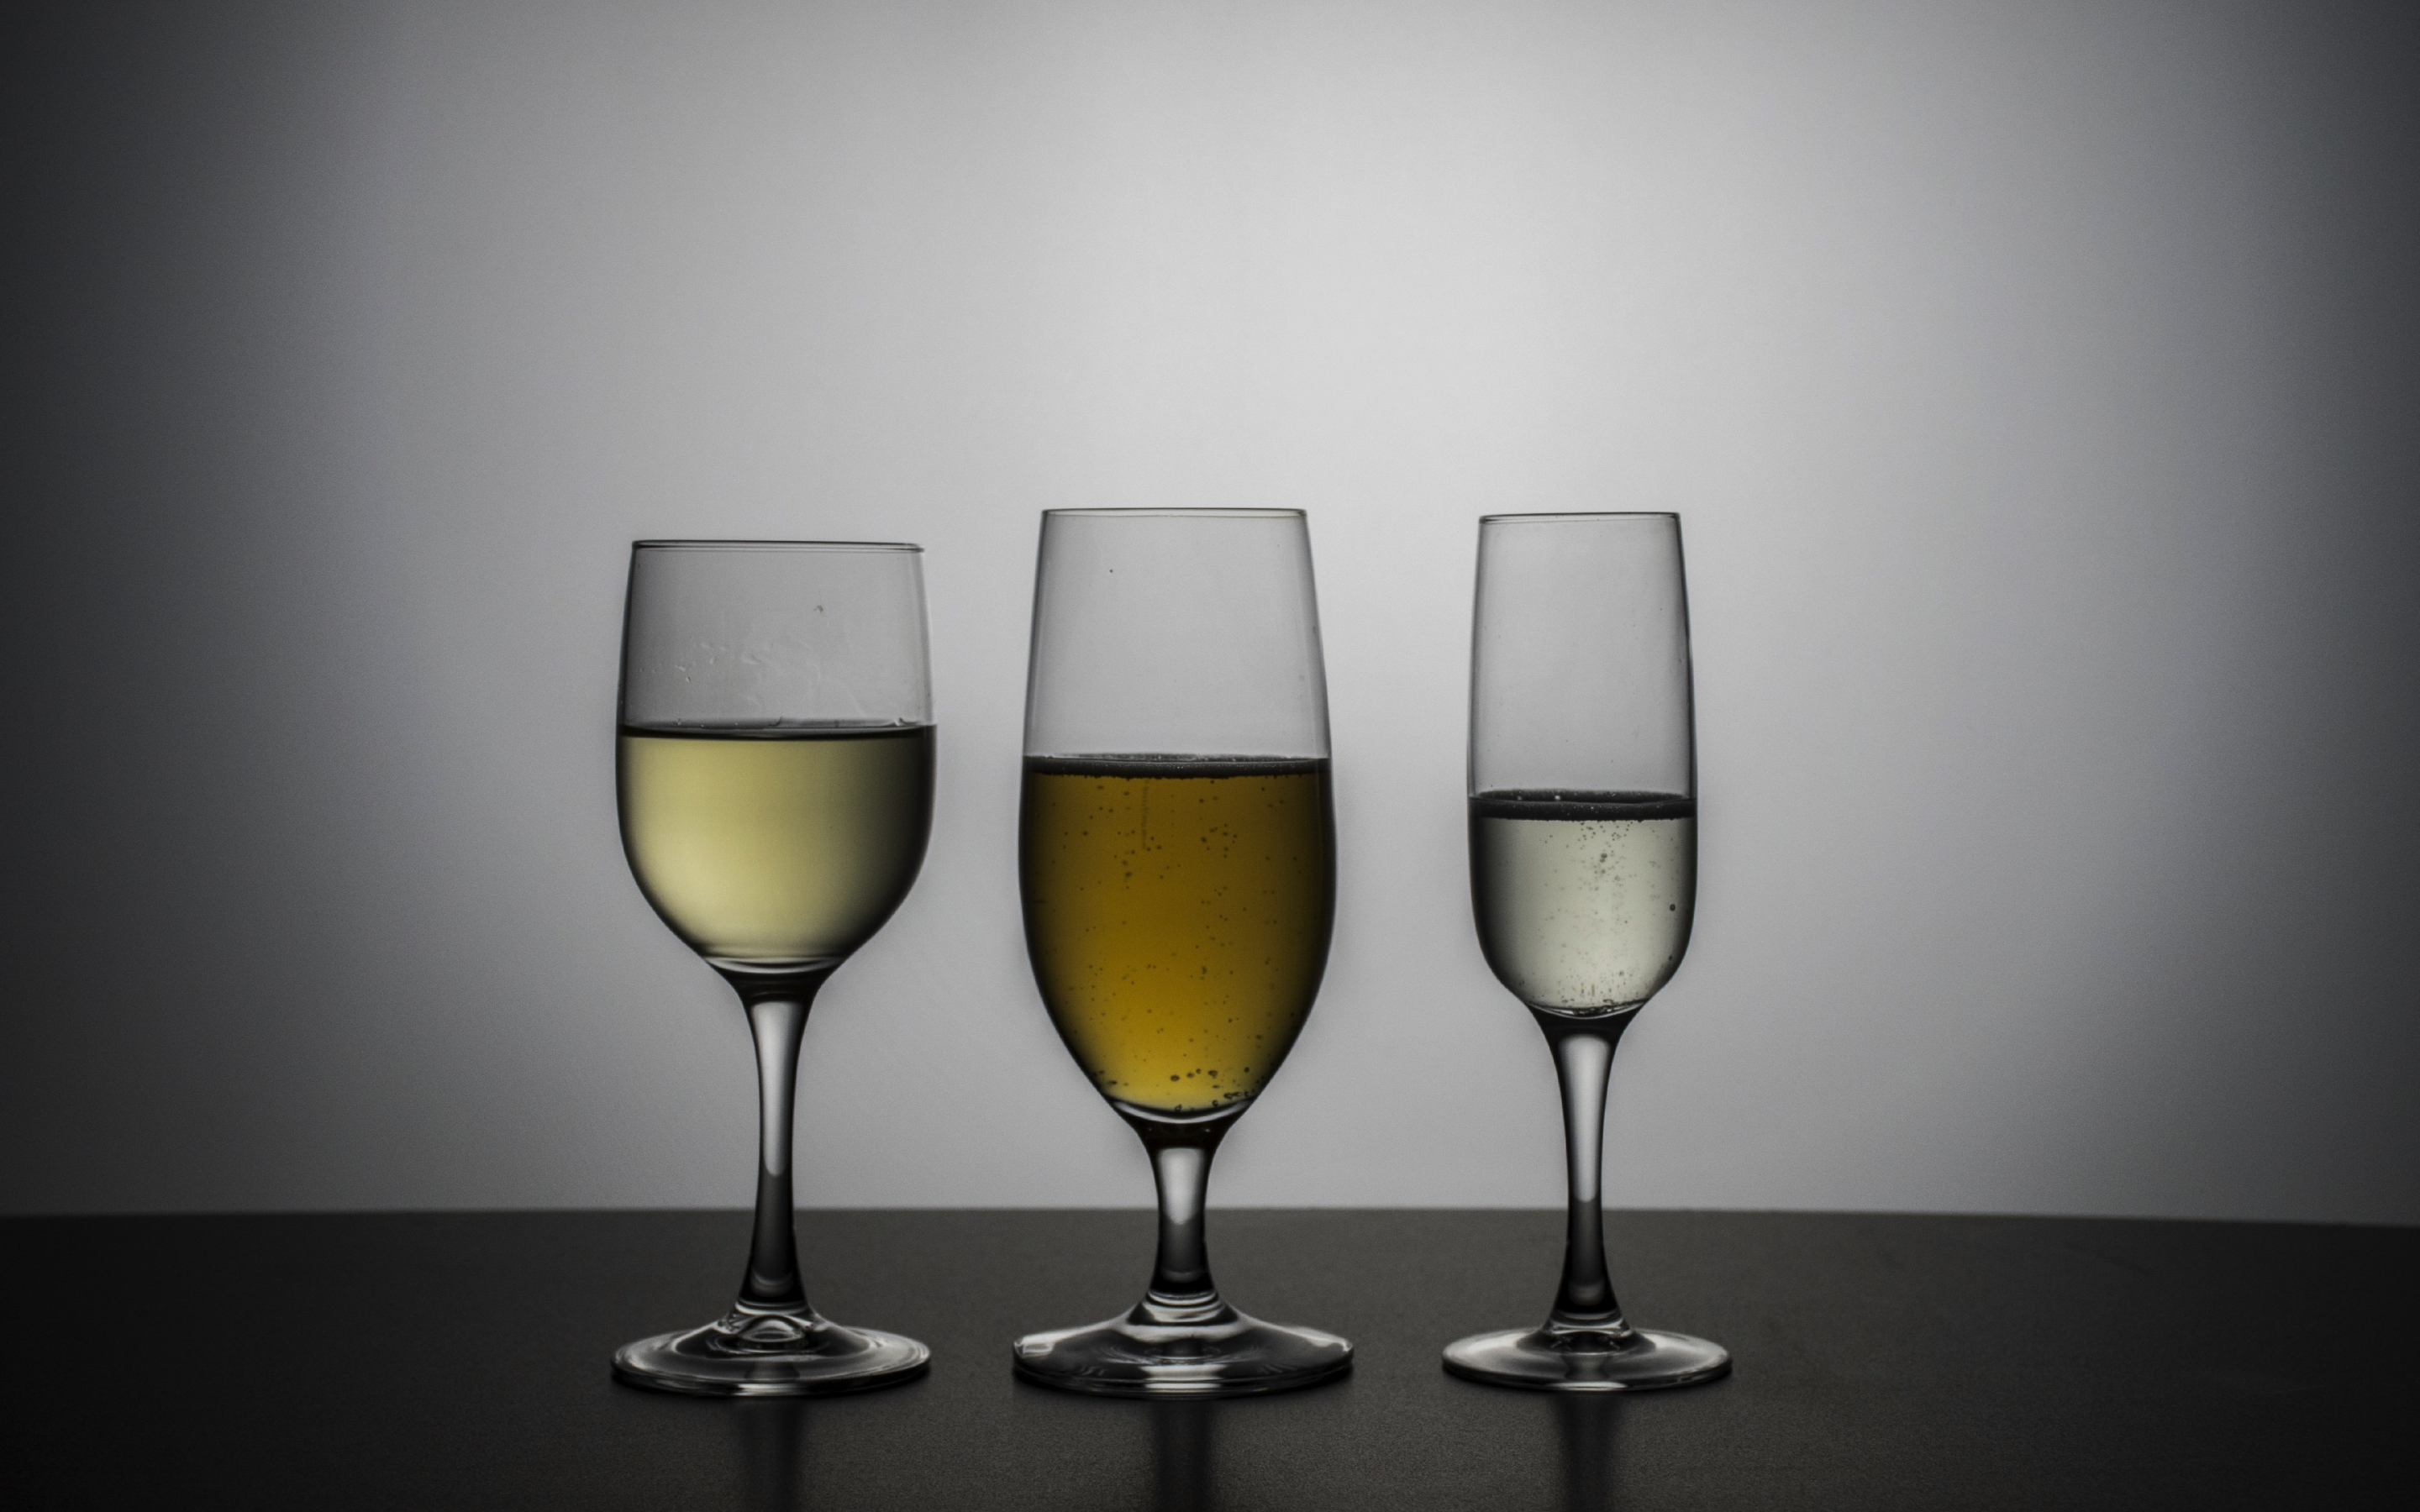 3 wine glasses, drinks, alcohol, 2880x1800 wallpaper